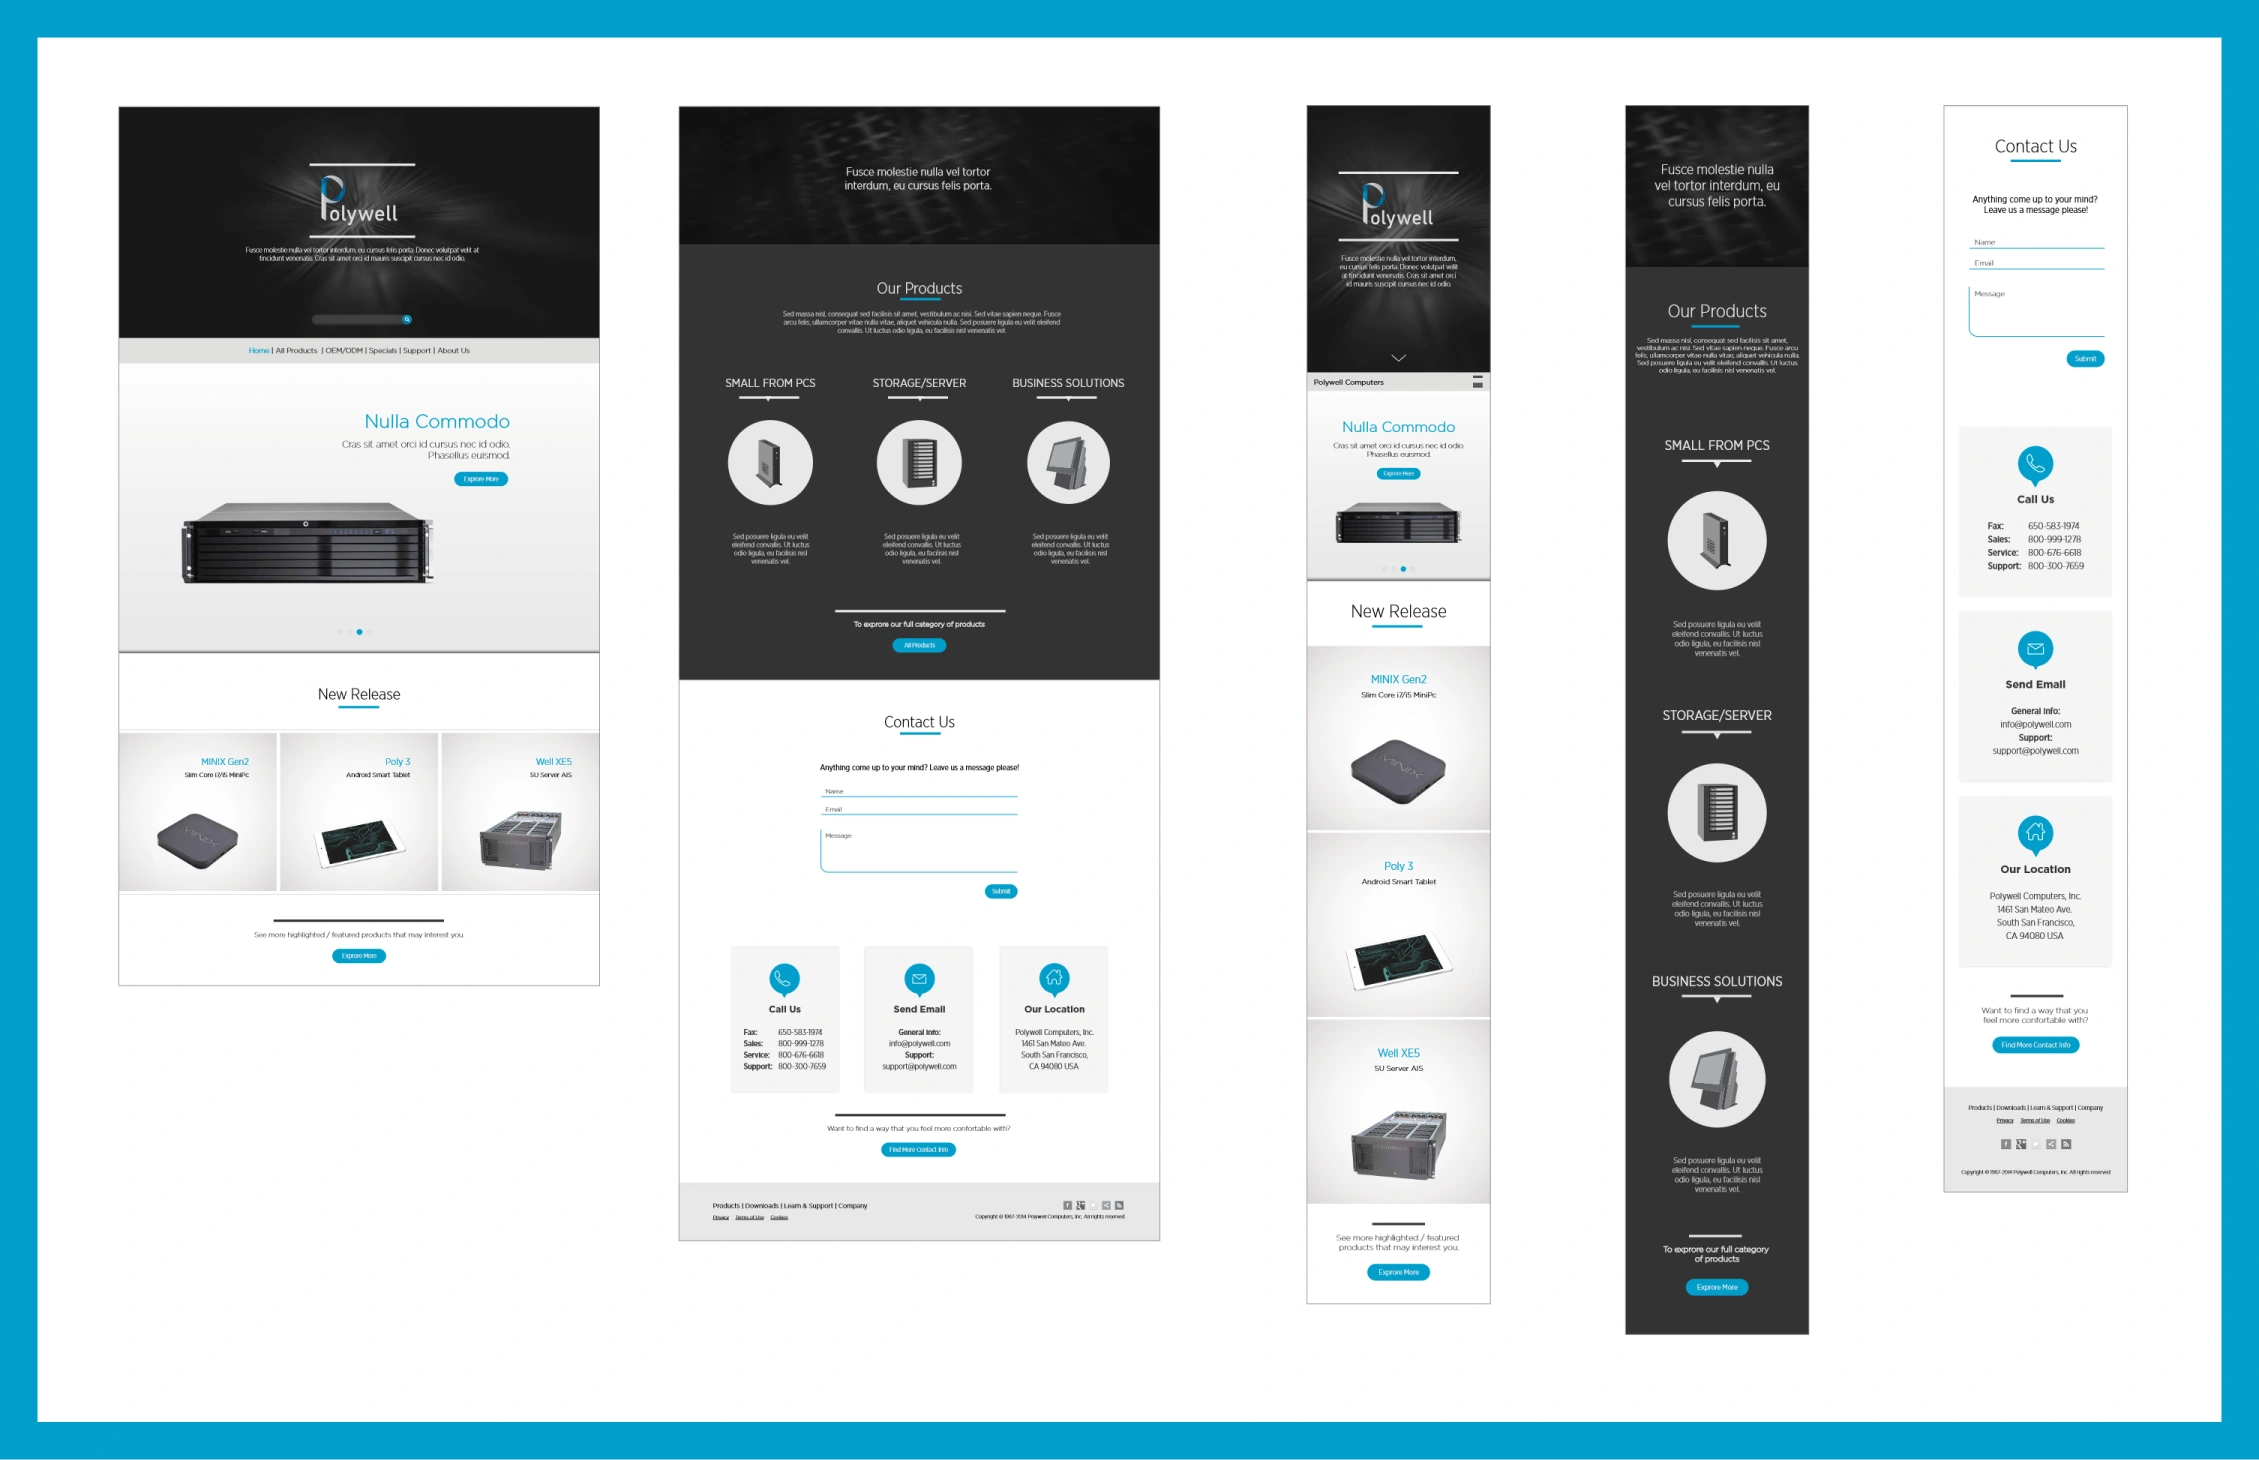 Mobile & Desktop Web: Applications - showcase image